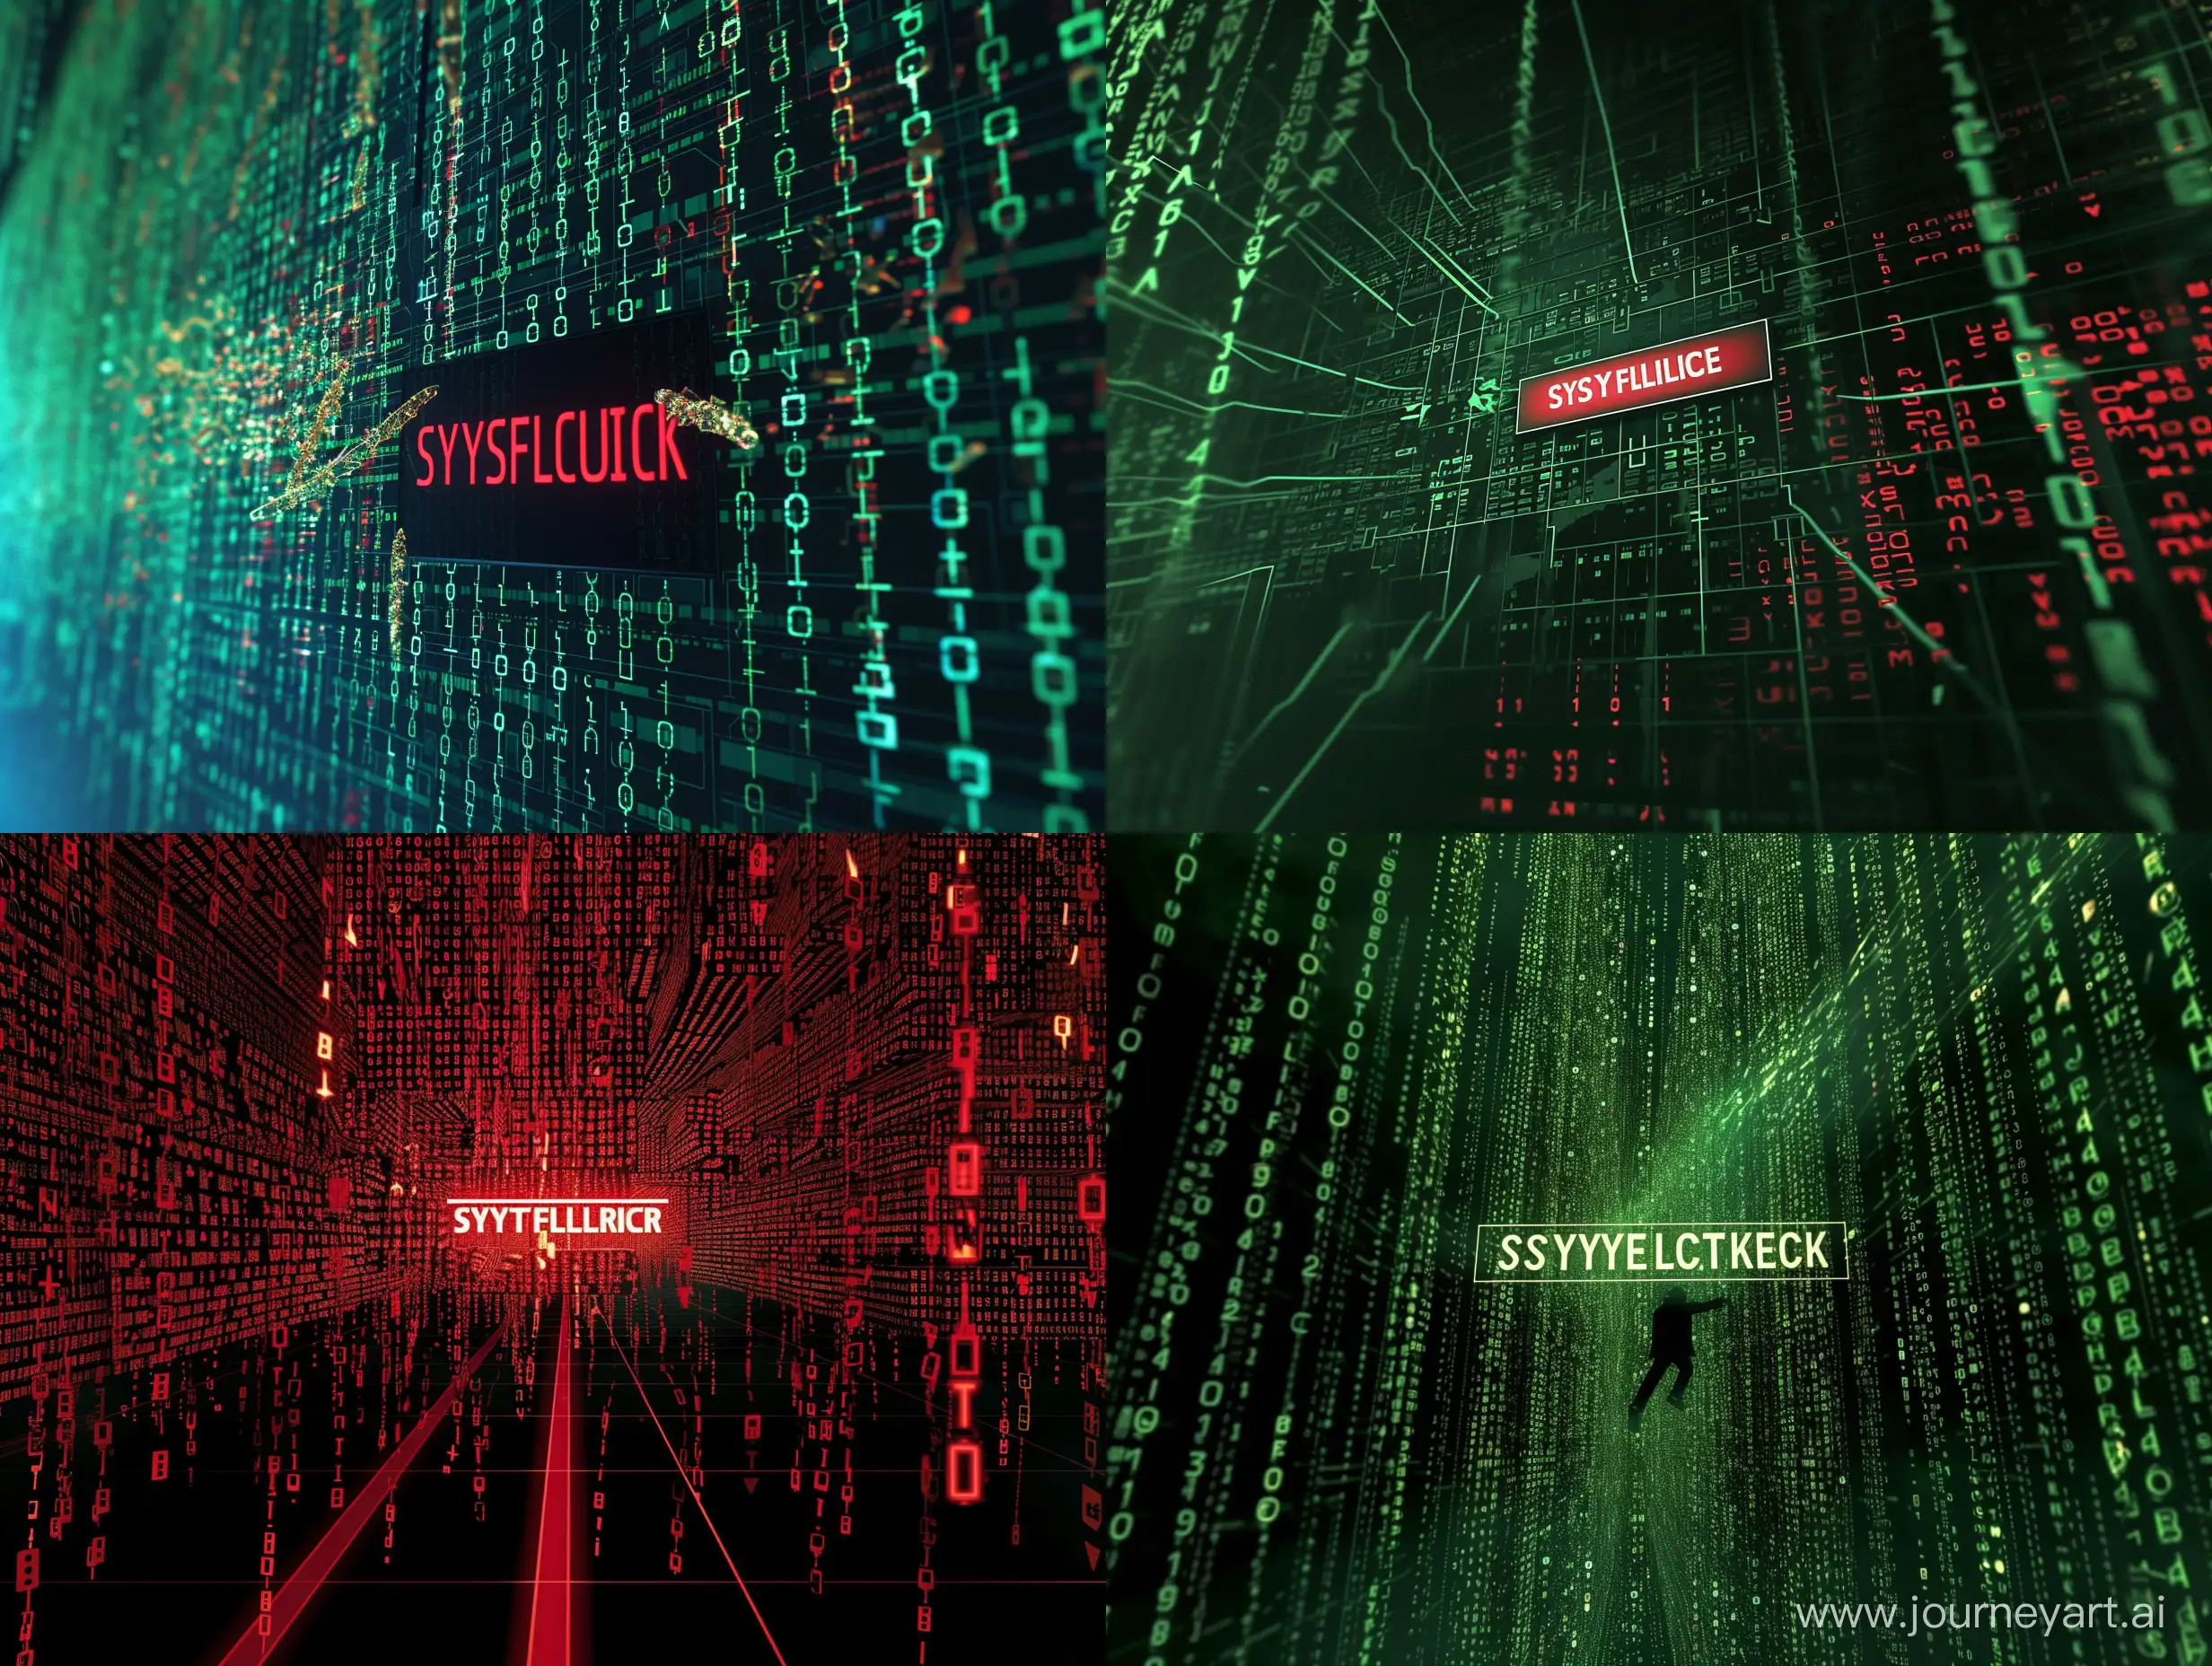 Futuristic-MatrixStyle-Wallpaper-System-Failure-Message